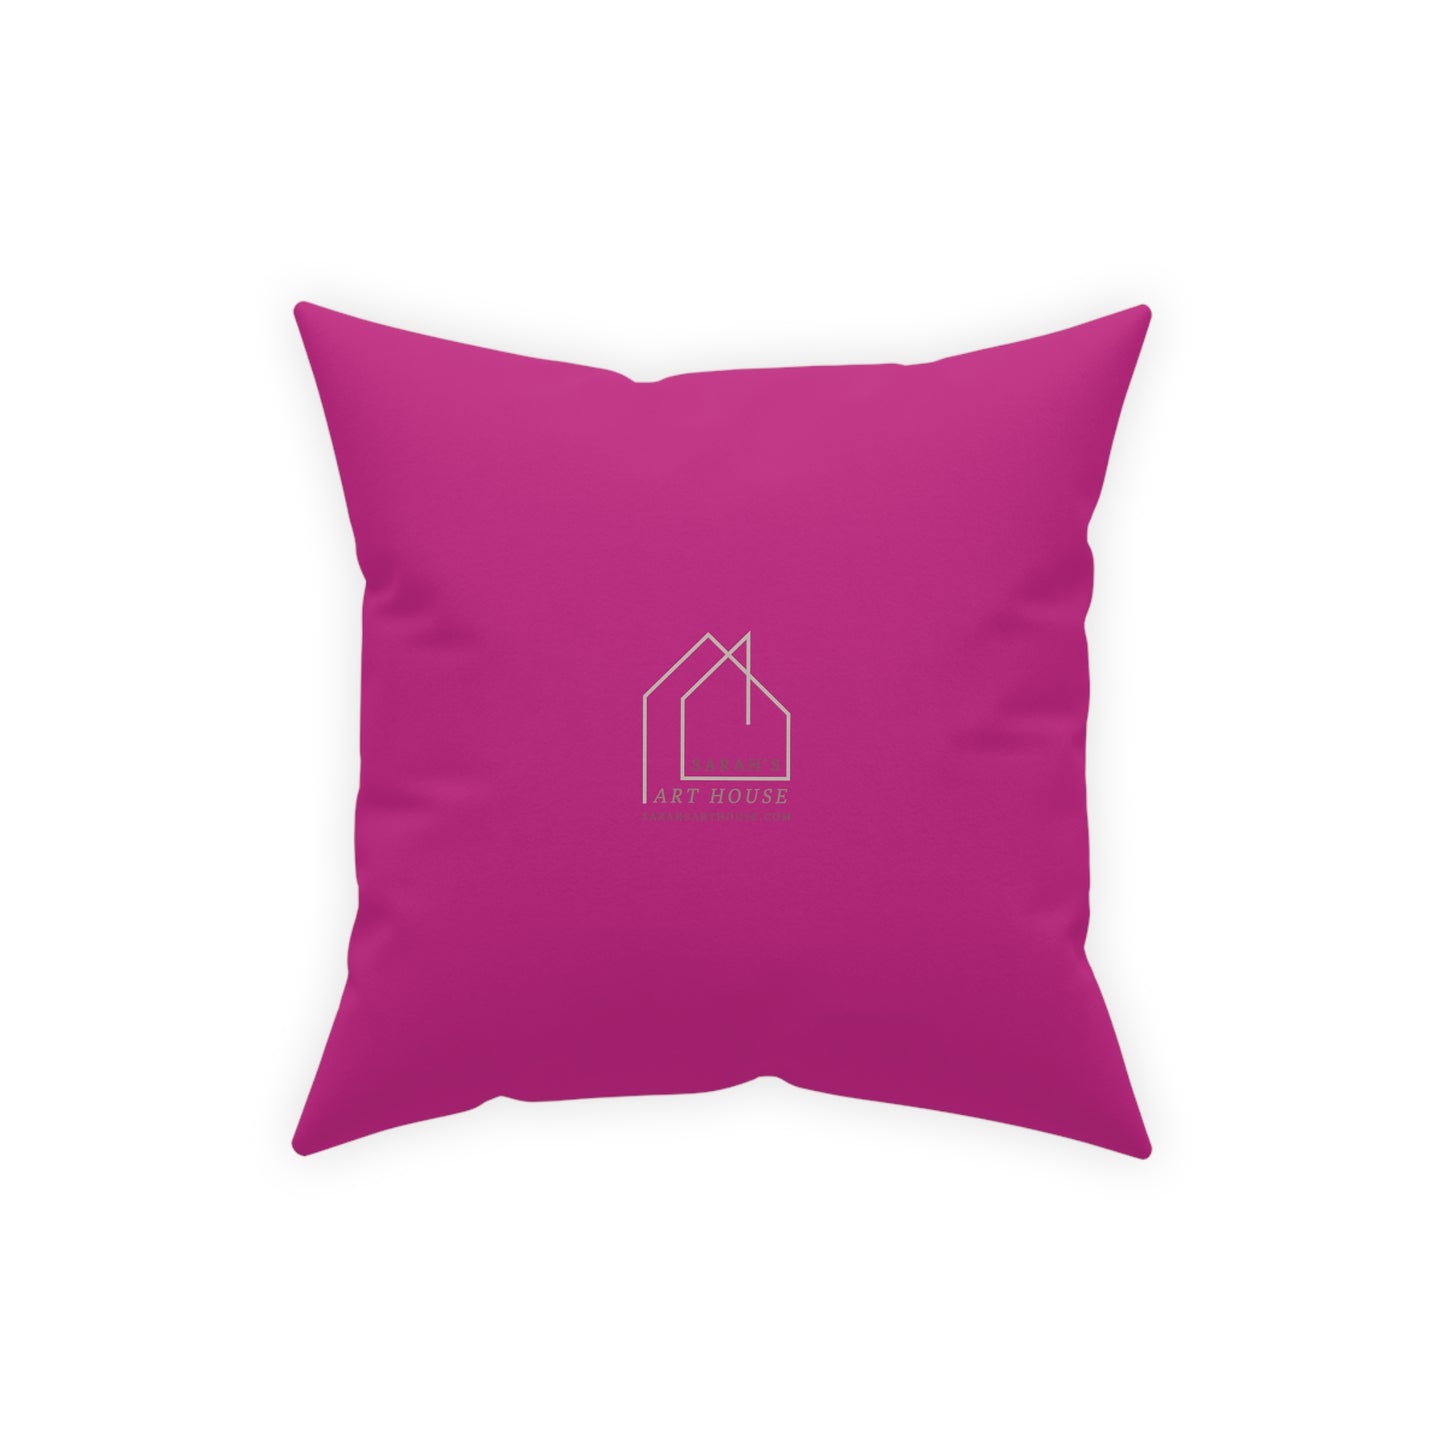 Pure Love - Pink Throw Pillow - Elephant art Throw pillow - Decorative Pillow for home